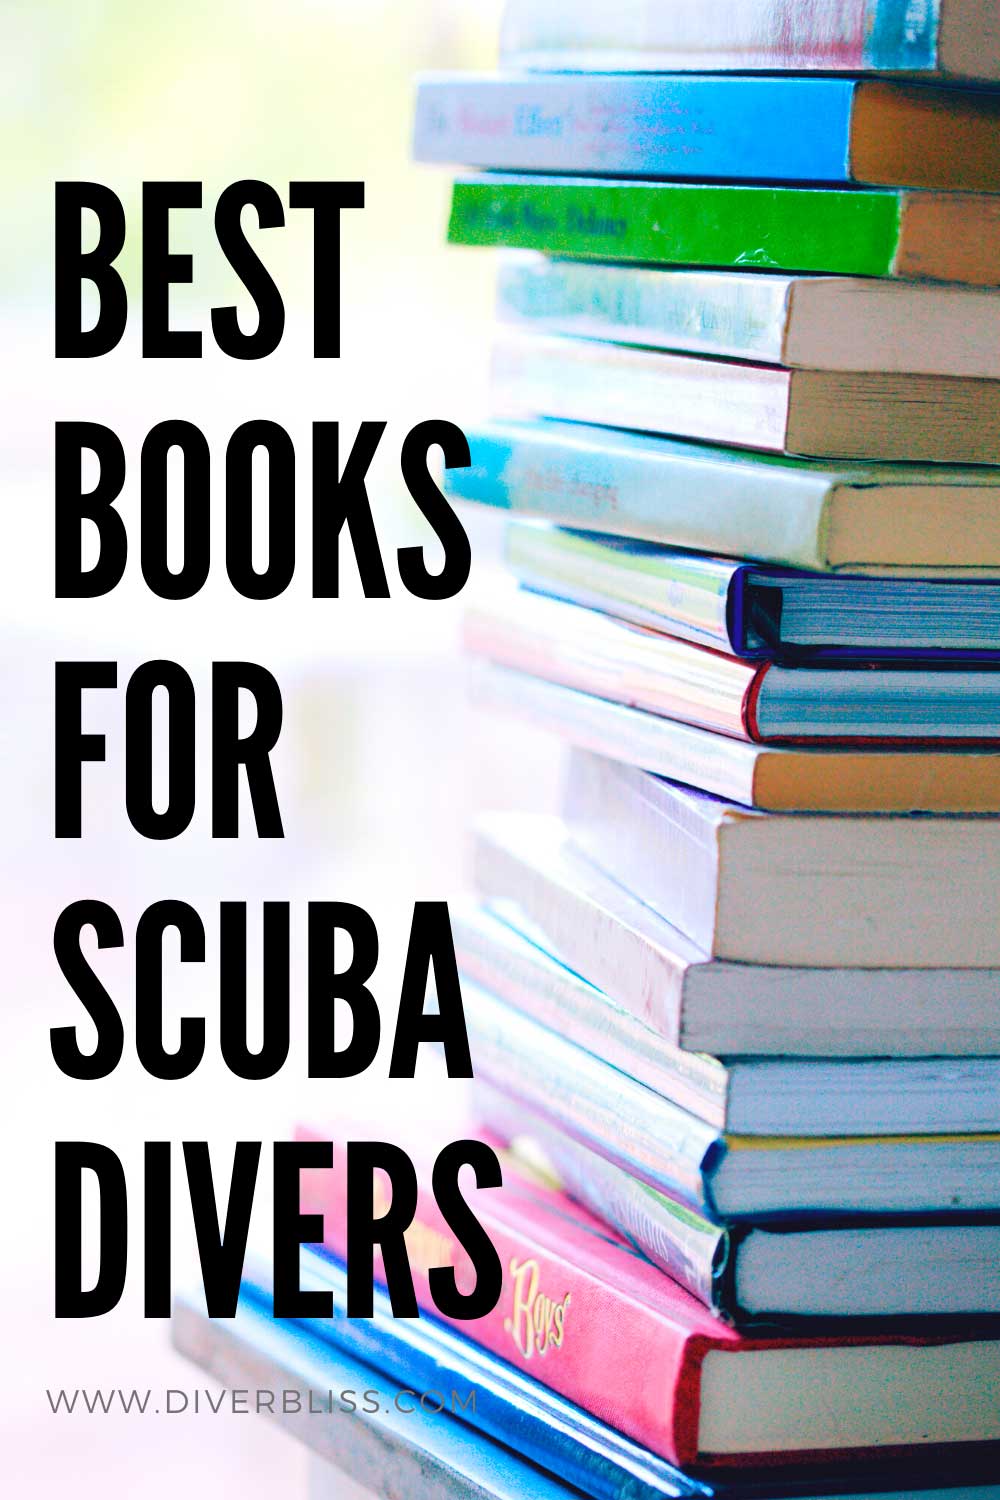 Best books for scuba divers